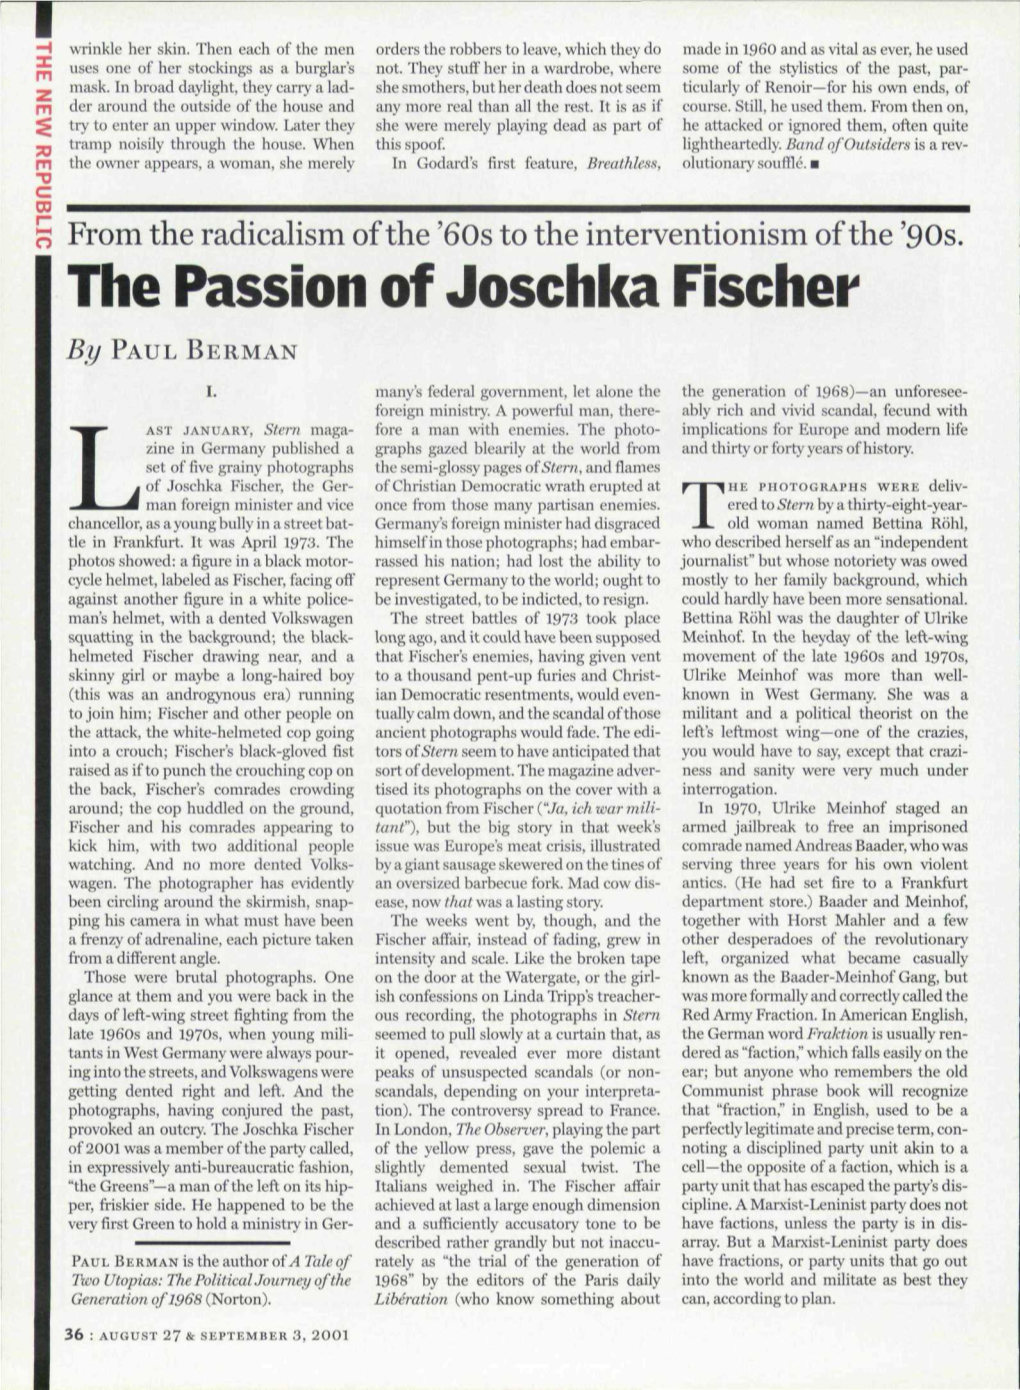 The Passion of Joschka Fischer' by PAUL BERMAN